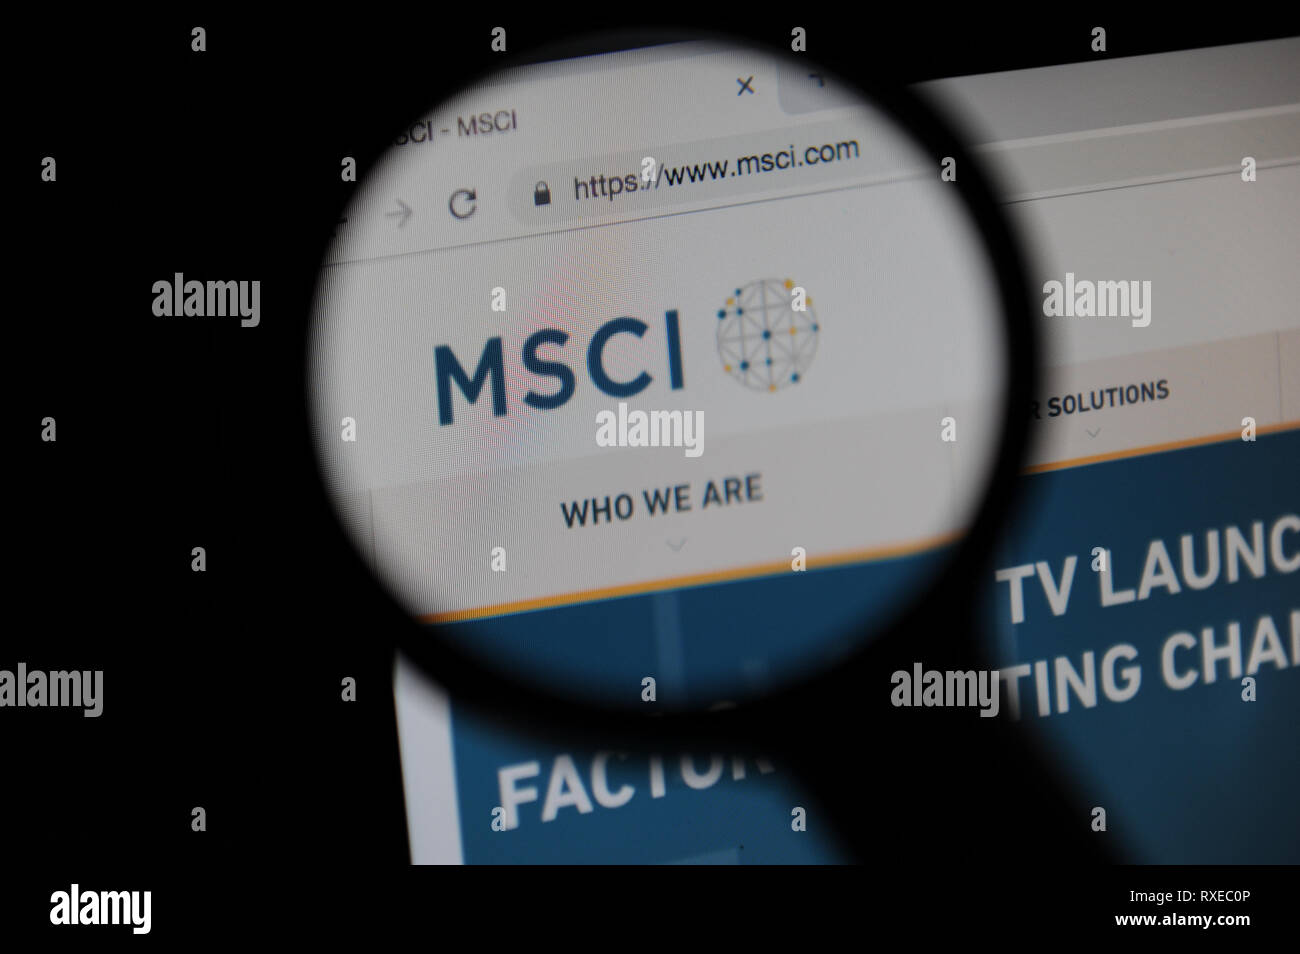 MSCI Inc website vistos a través de una lupa Foto de stock